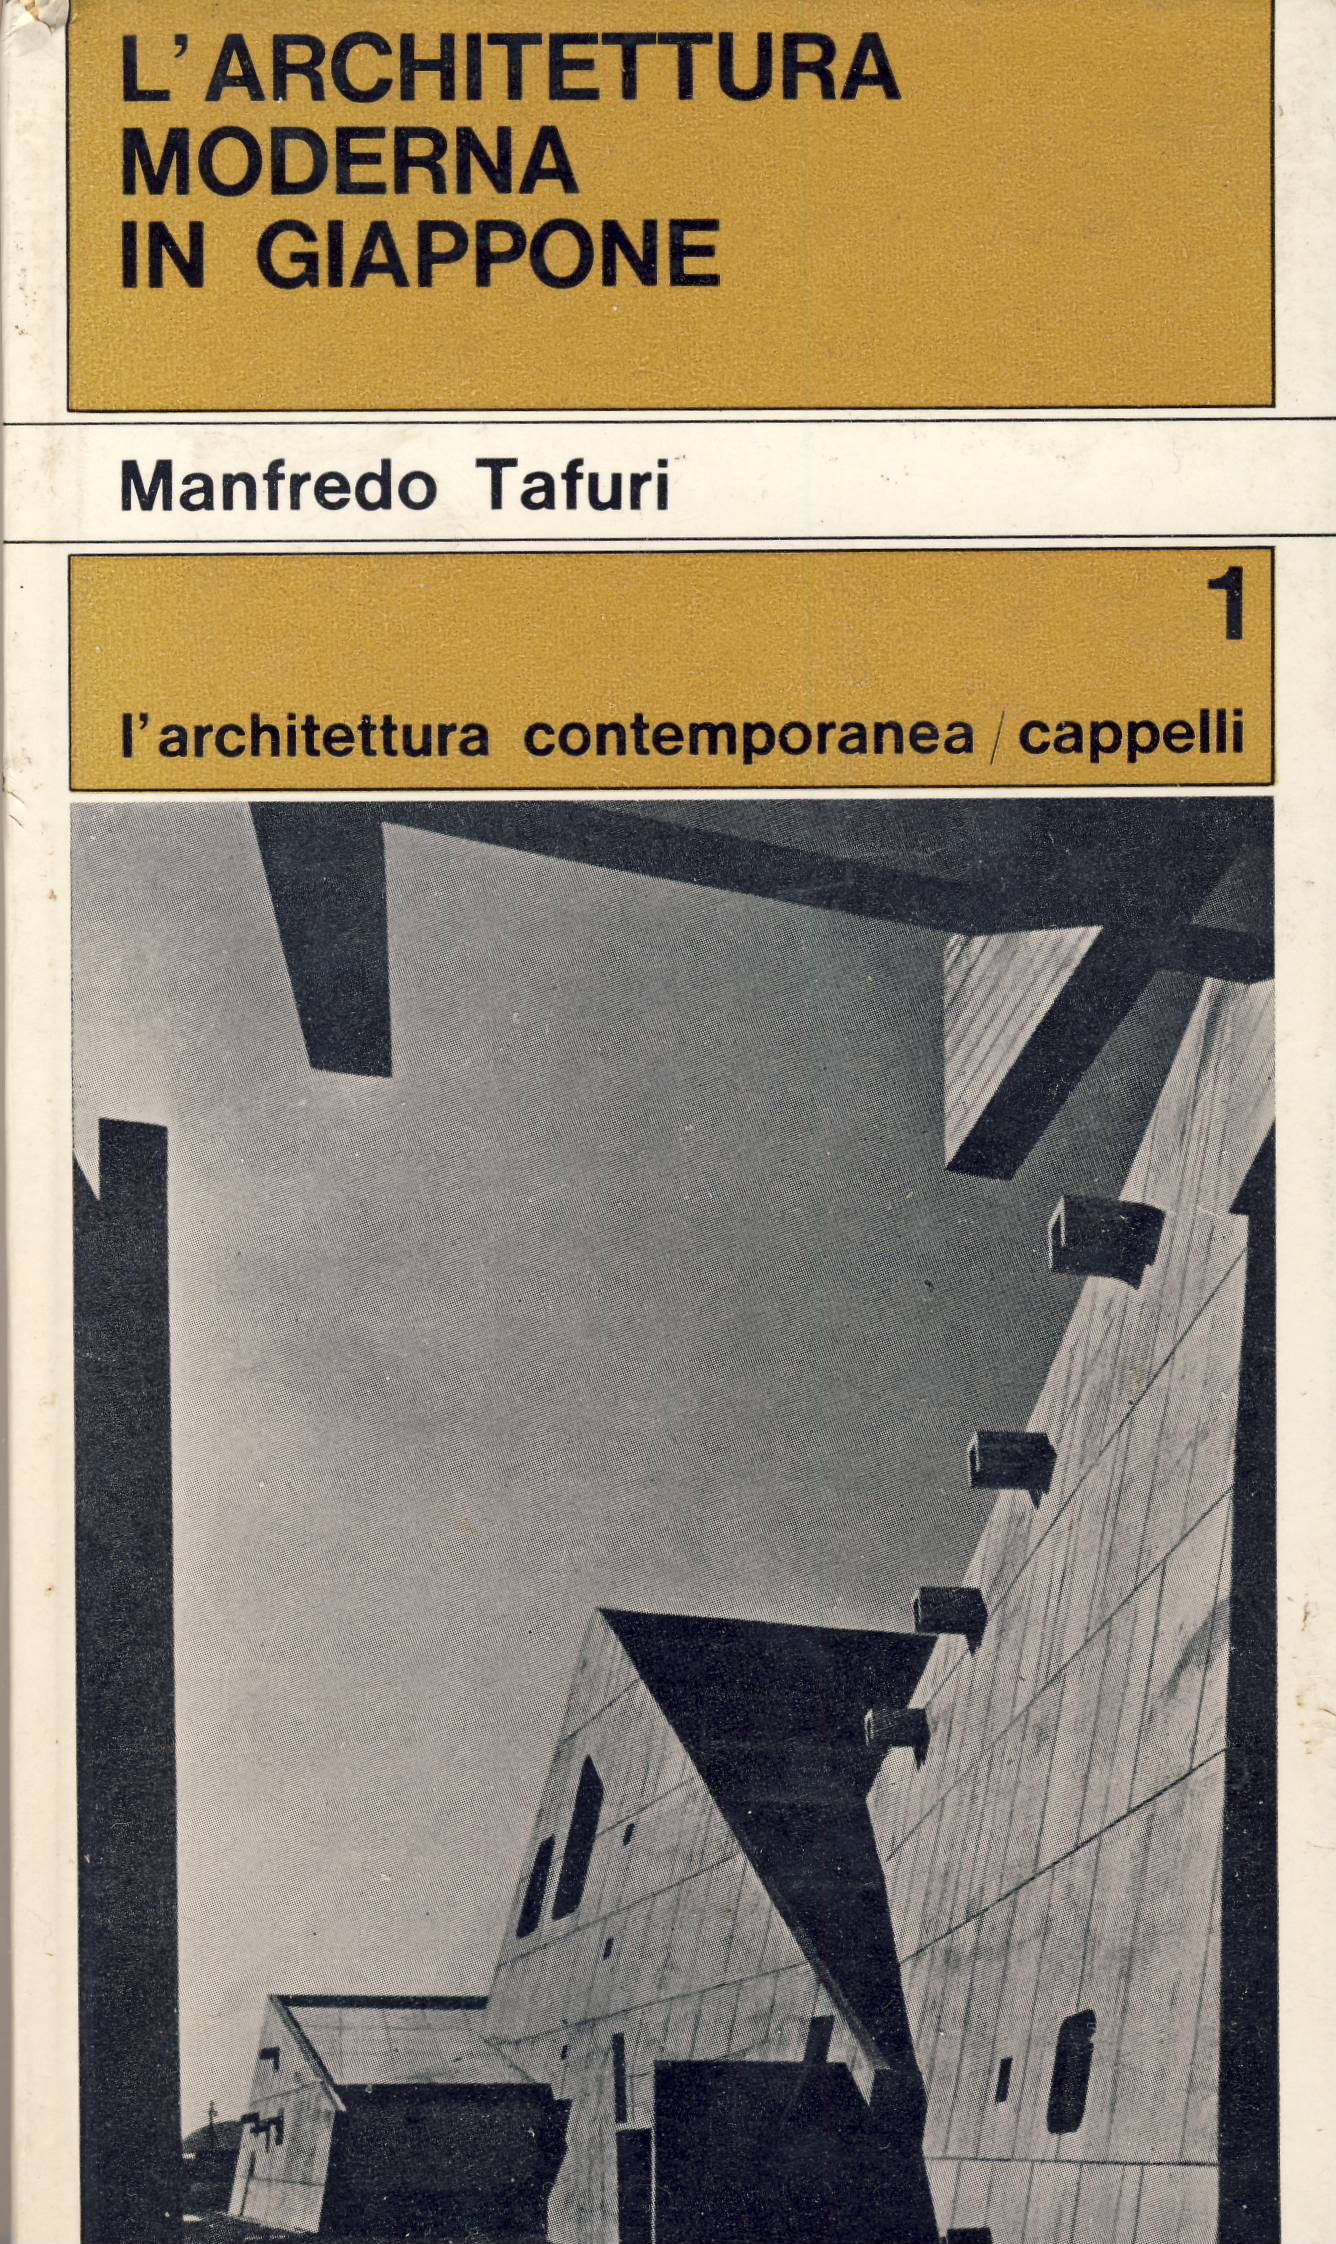 Manfredo Tafuri - L'architettura moderna in Giappone (Cappelli, 1964)